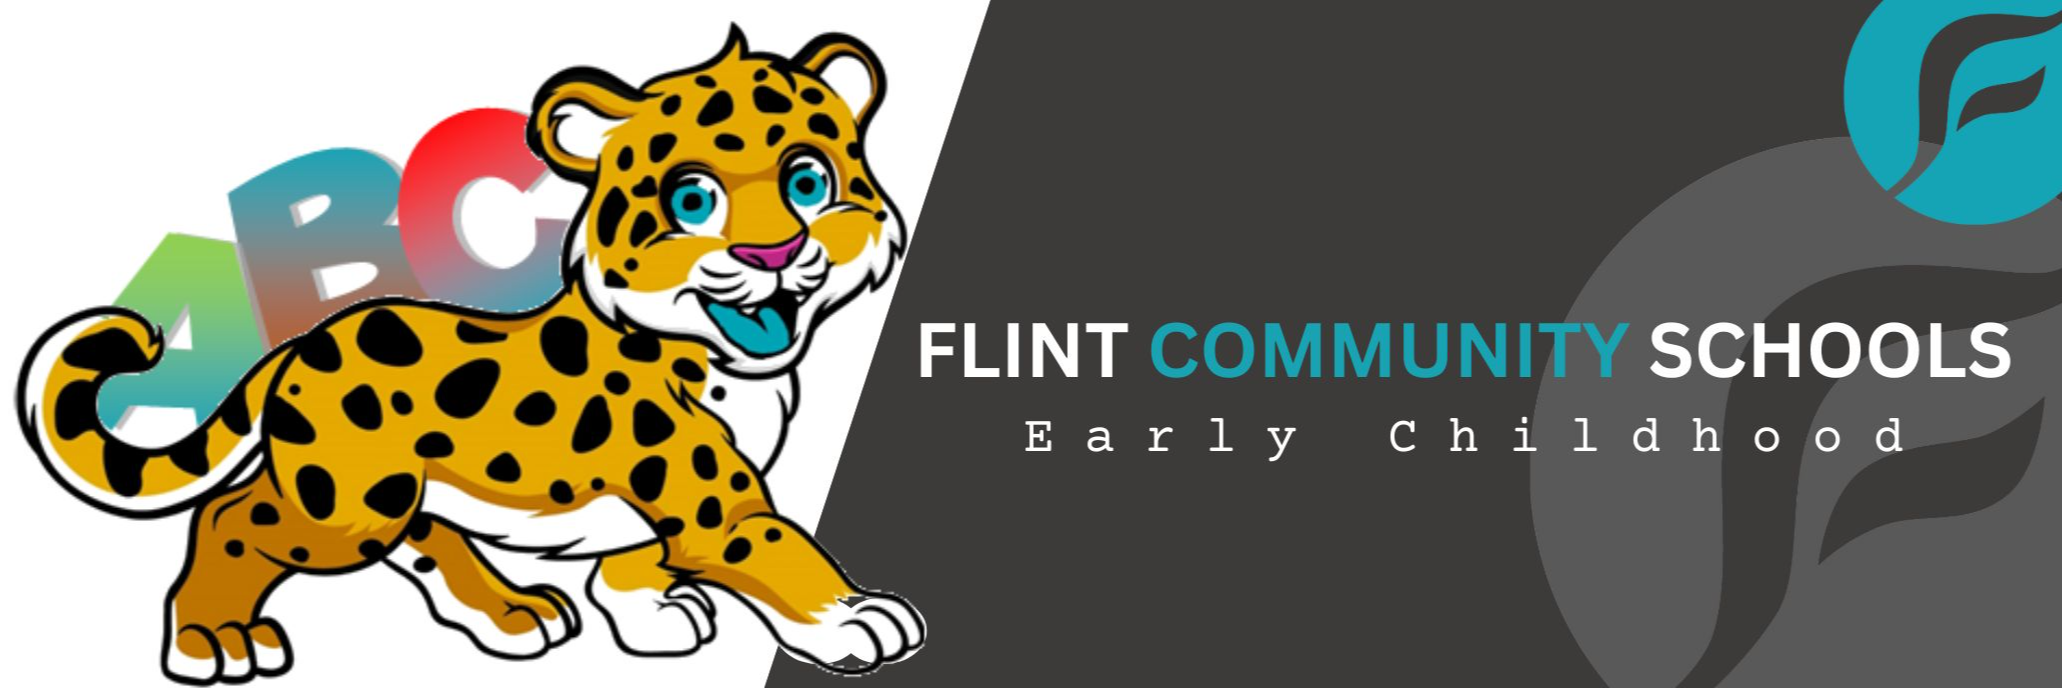 Flint Community Schools Early Childhood